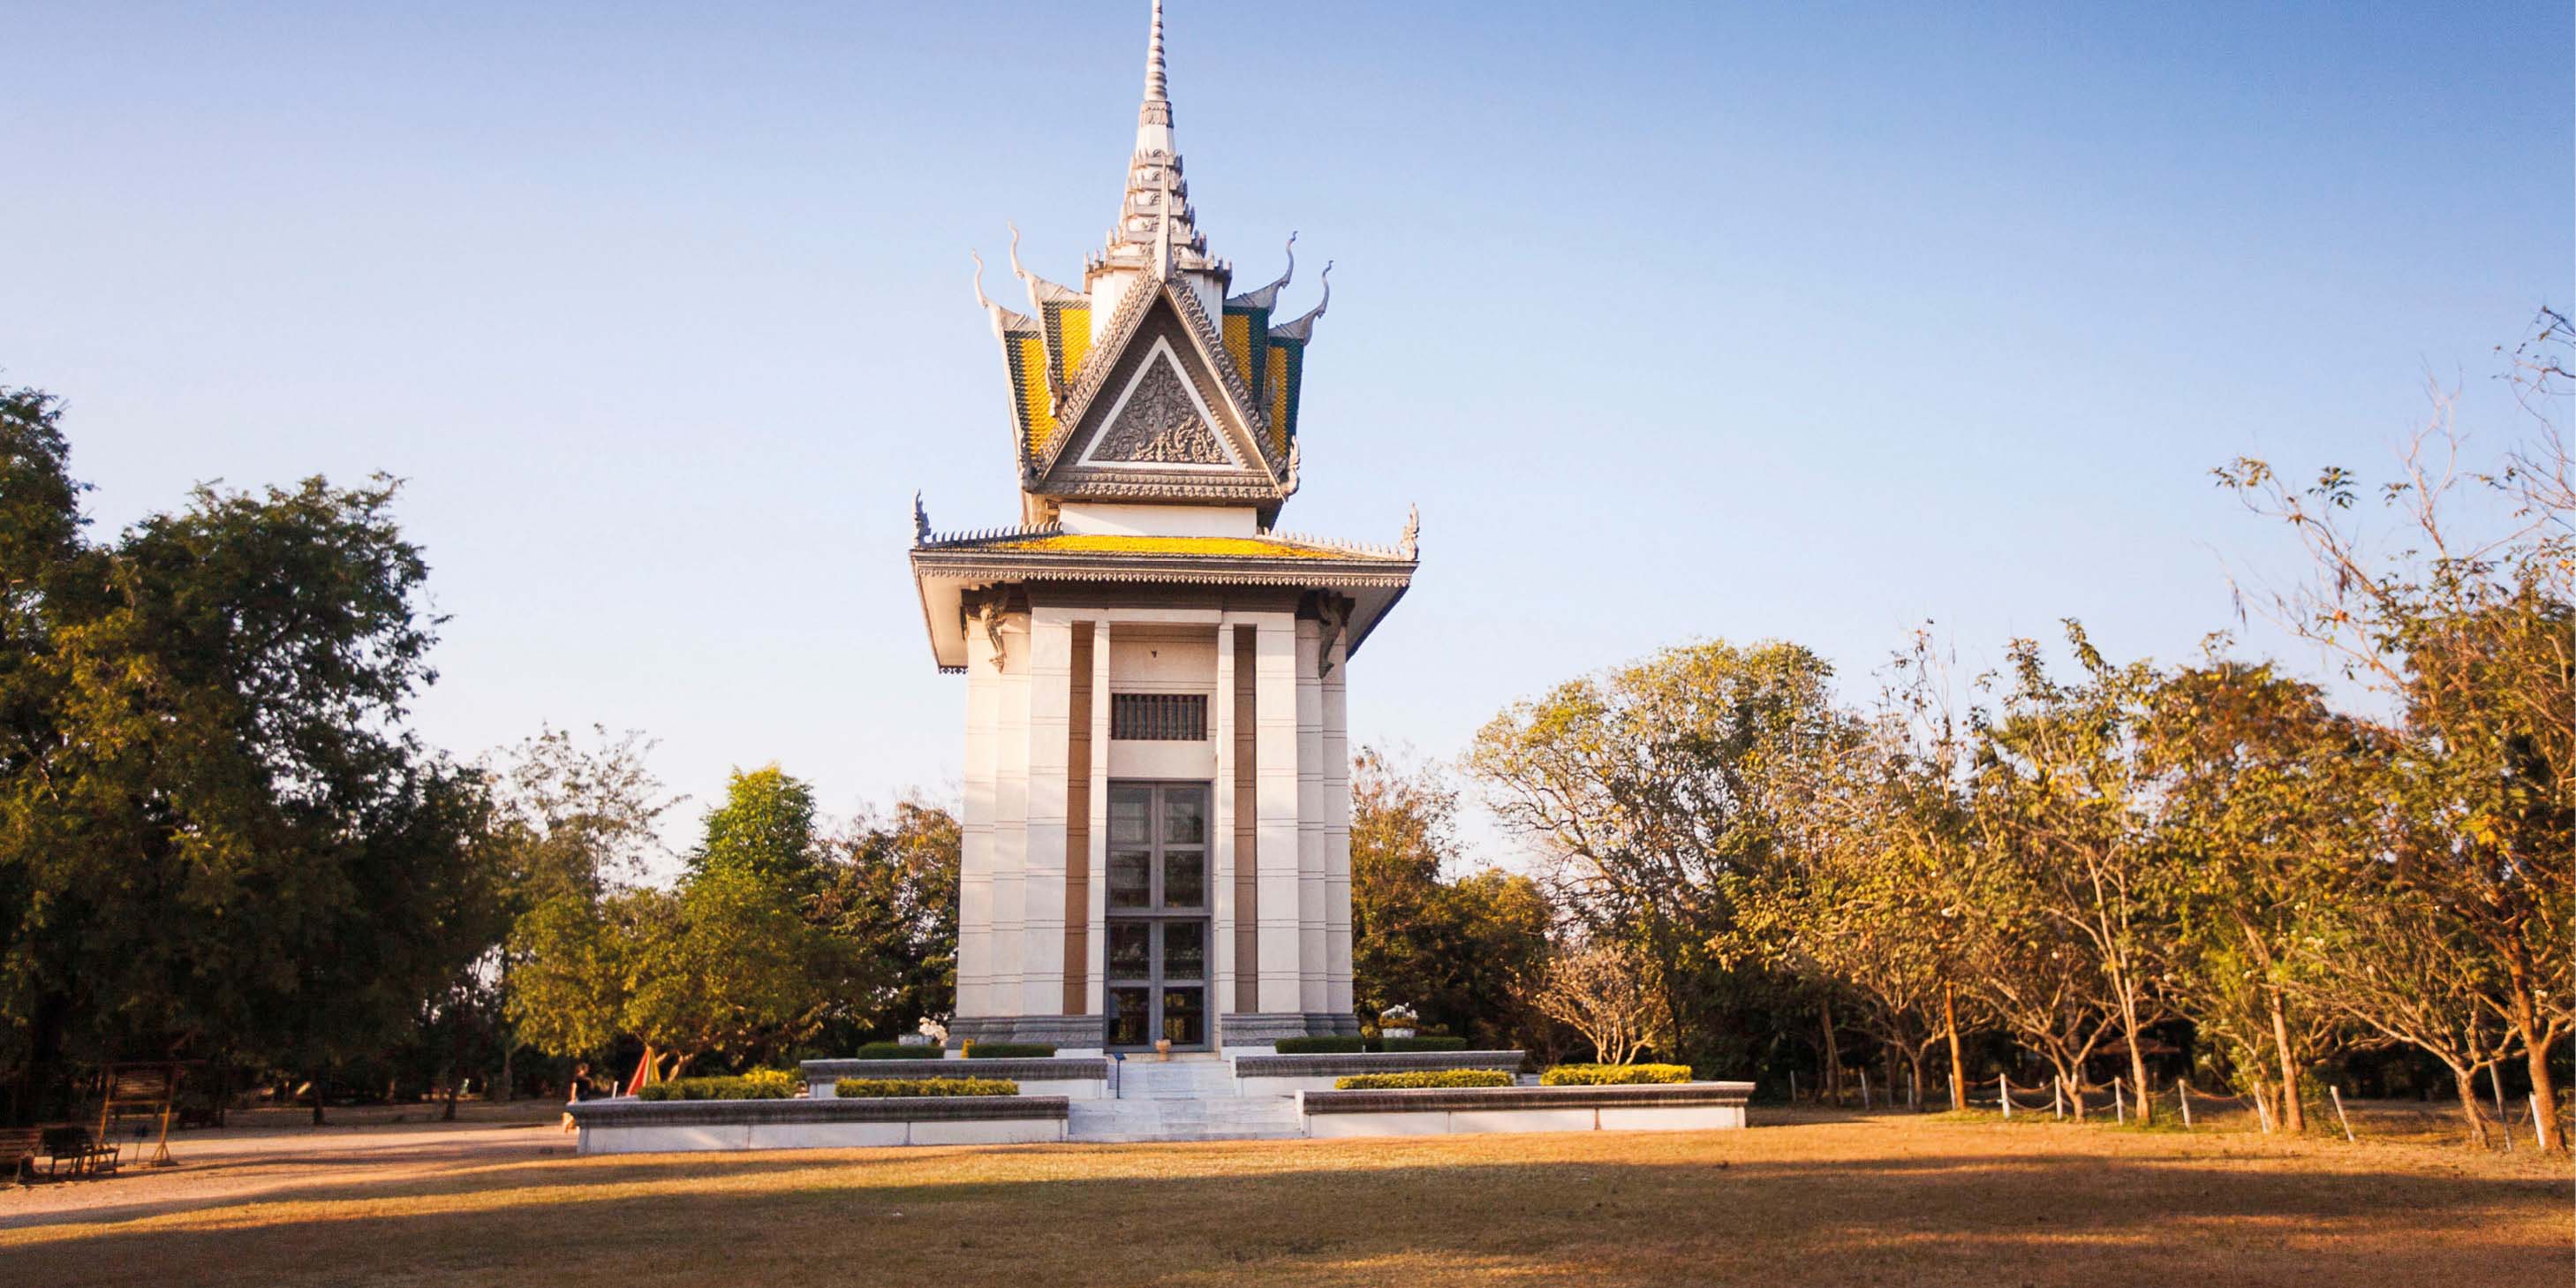 Killing Fields monument in Phnom Penh, Cambodia